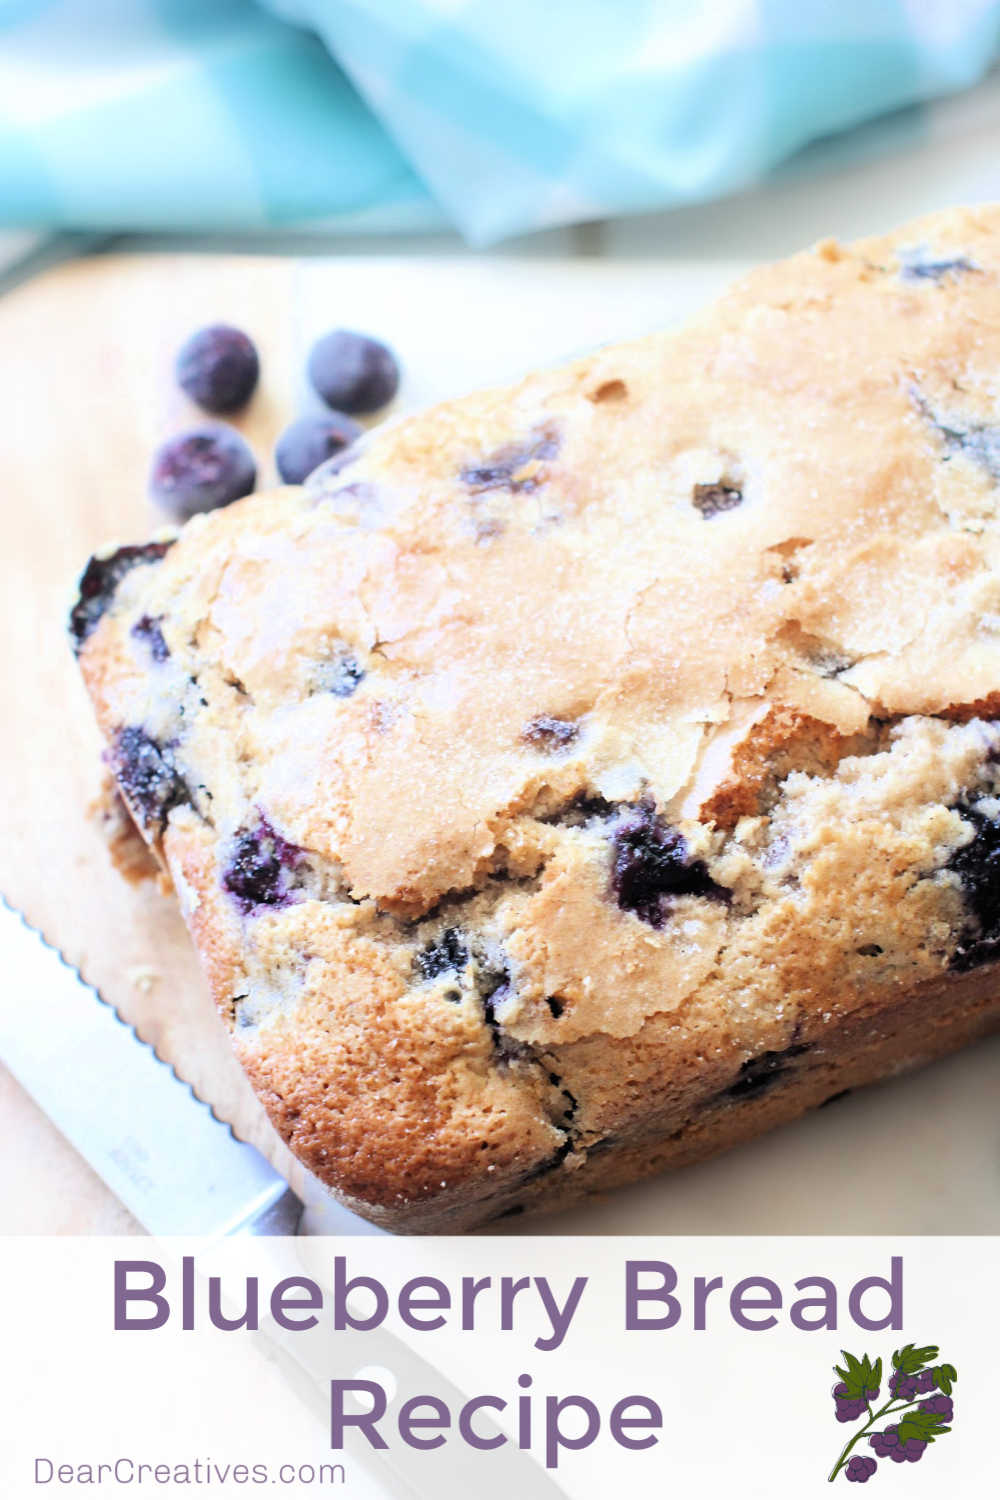 Blueberry Bread Recipe - Easy To Make!